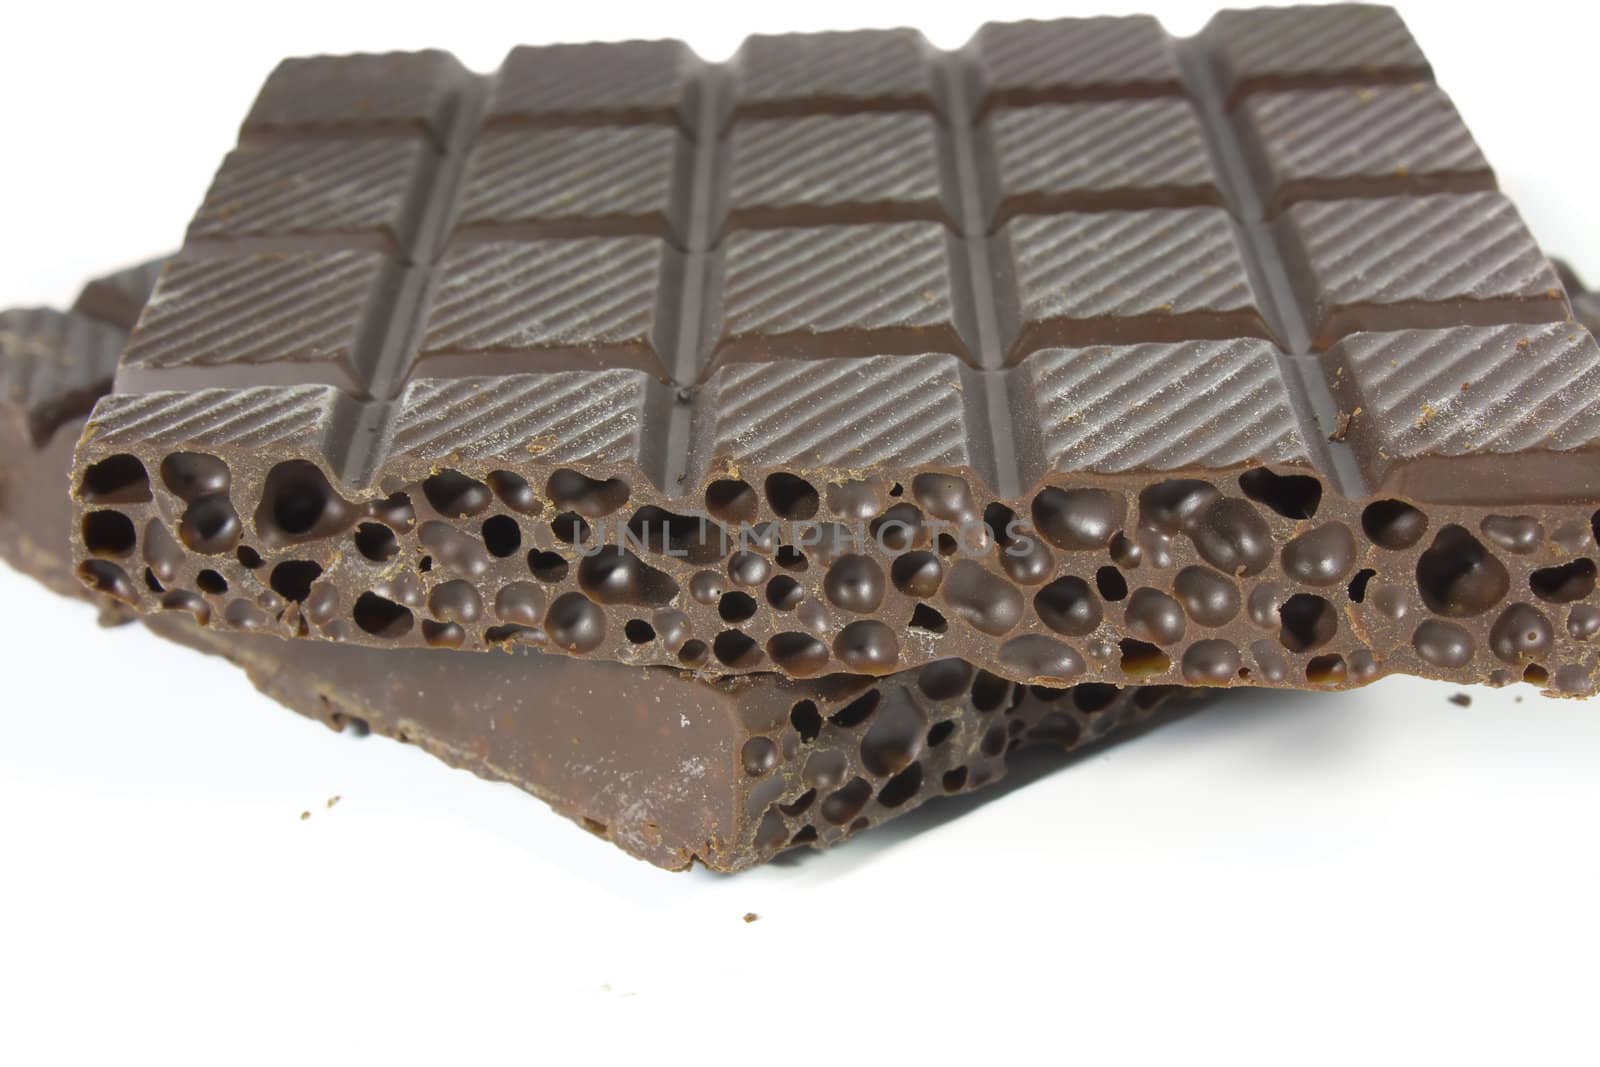 Porous chocolate by Dikar